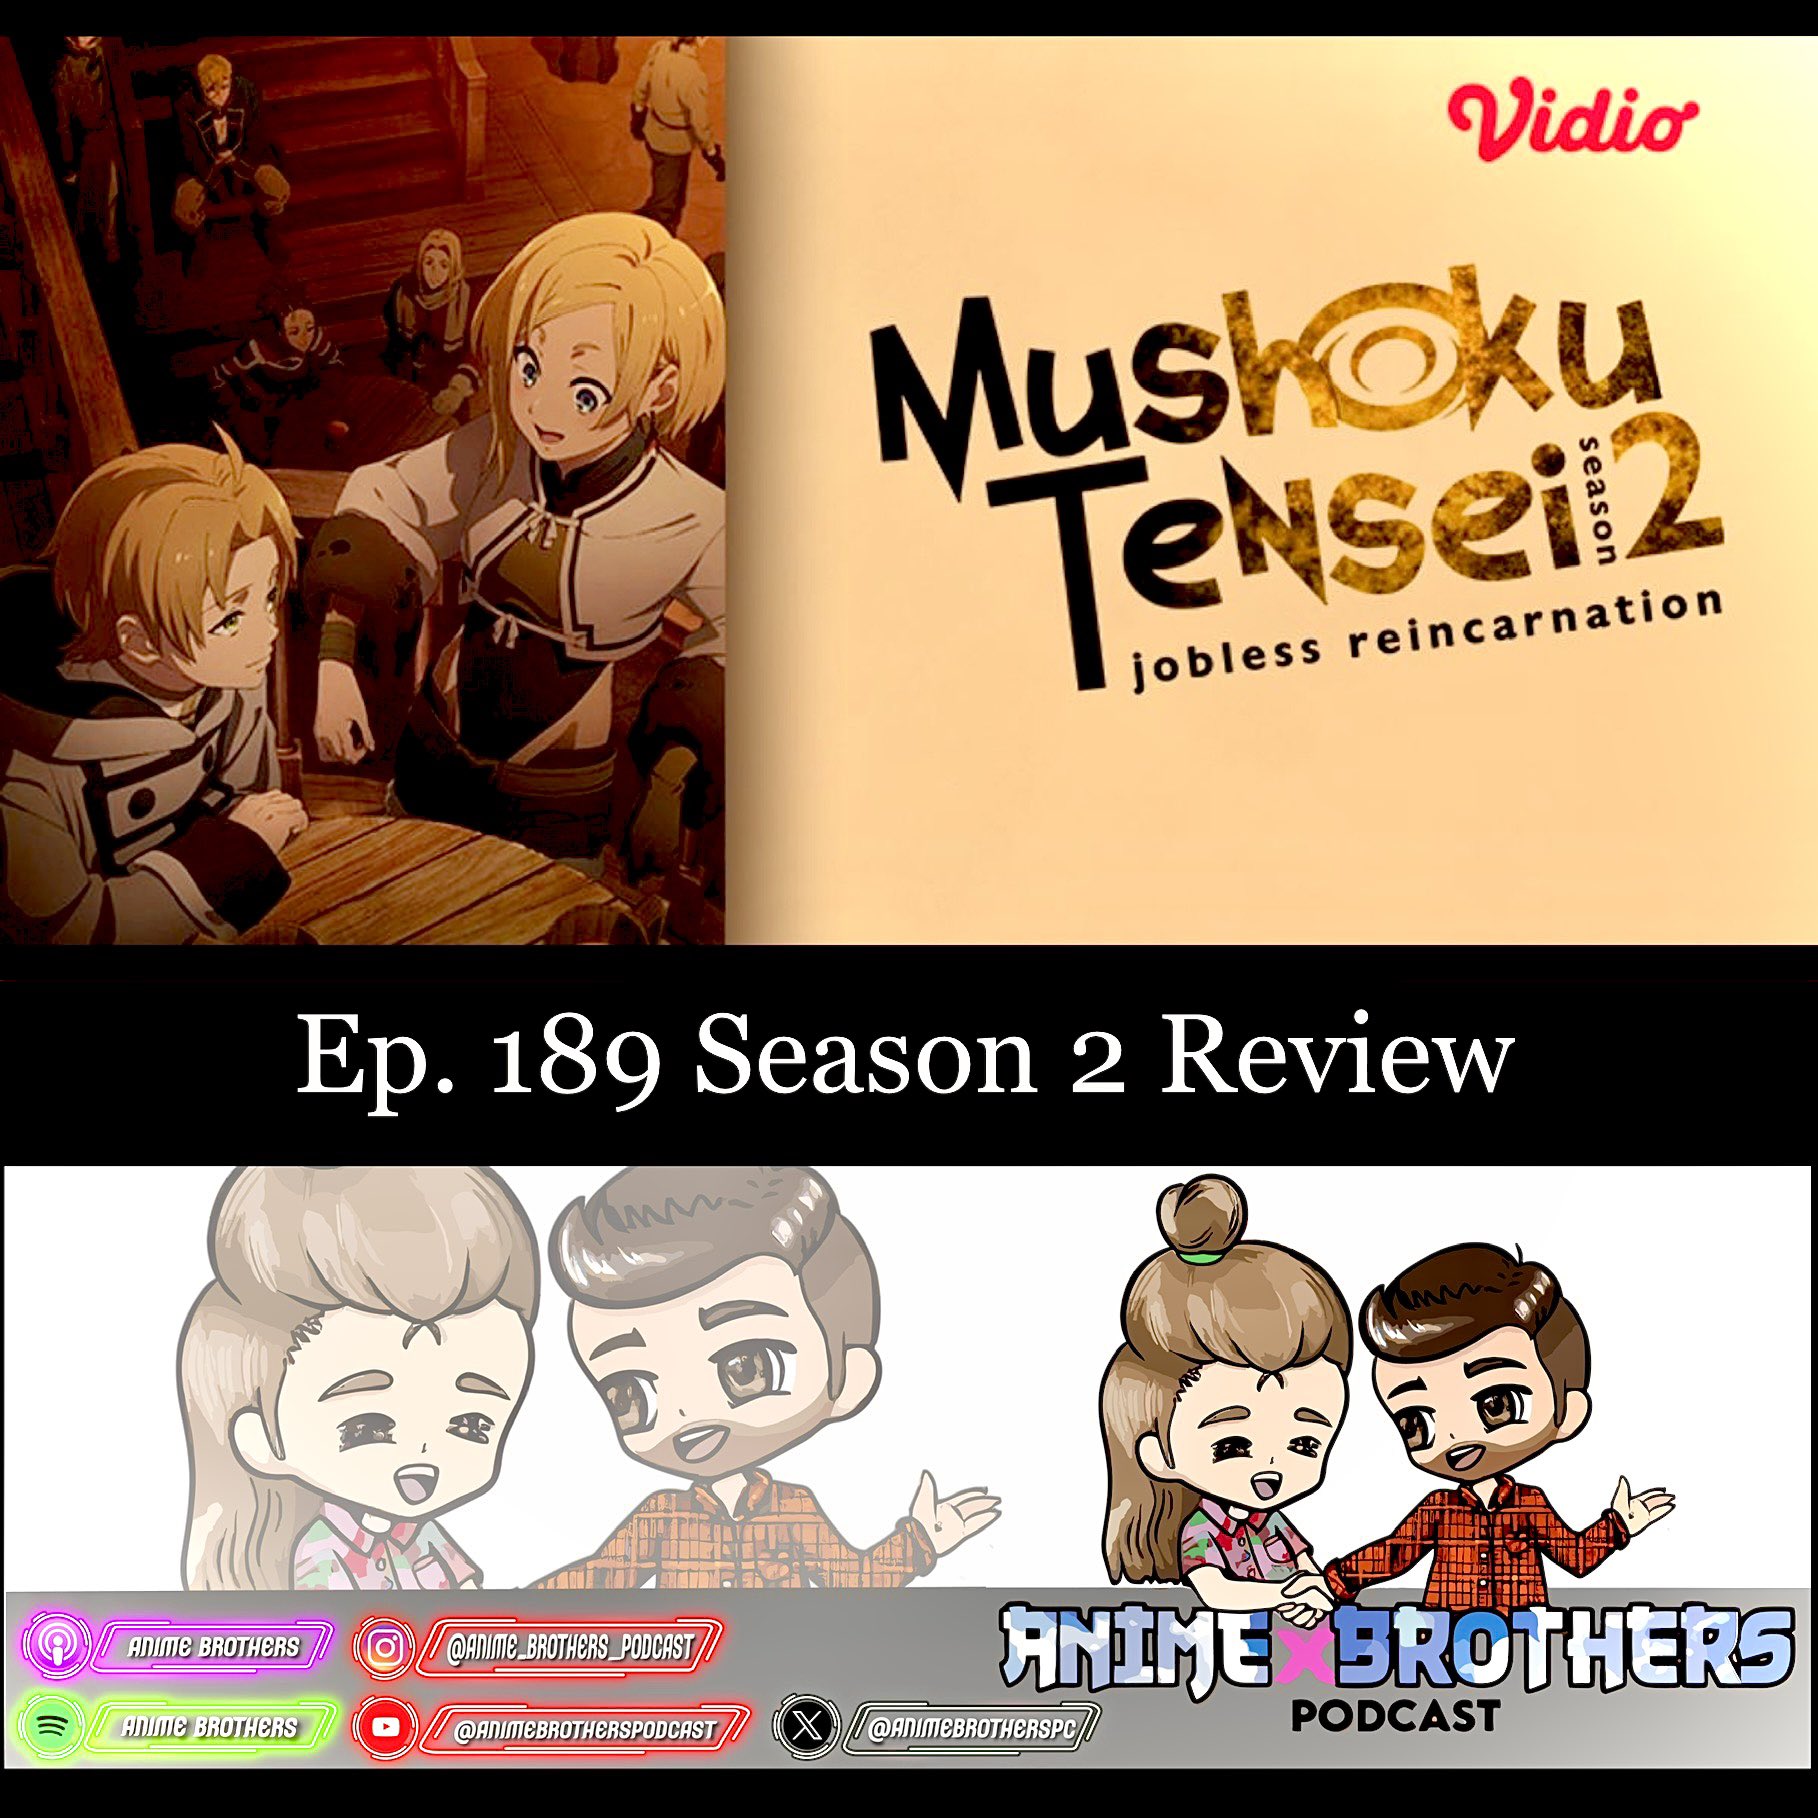 Mushoku Tensei - Top podcast episodes